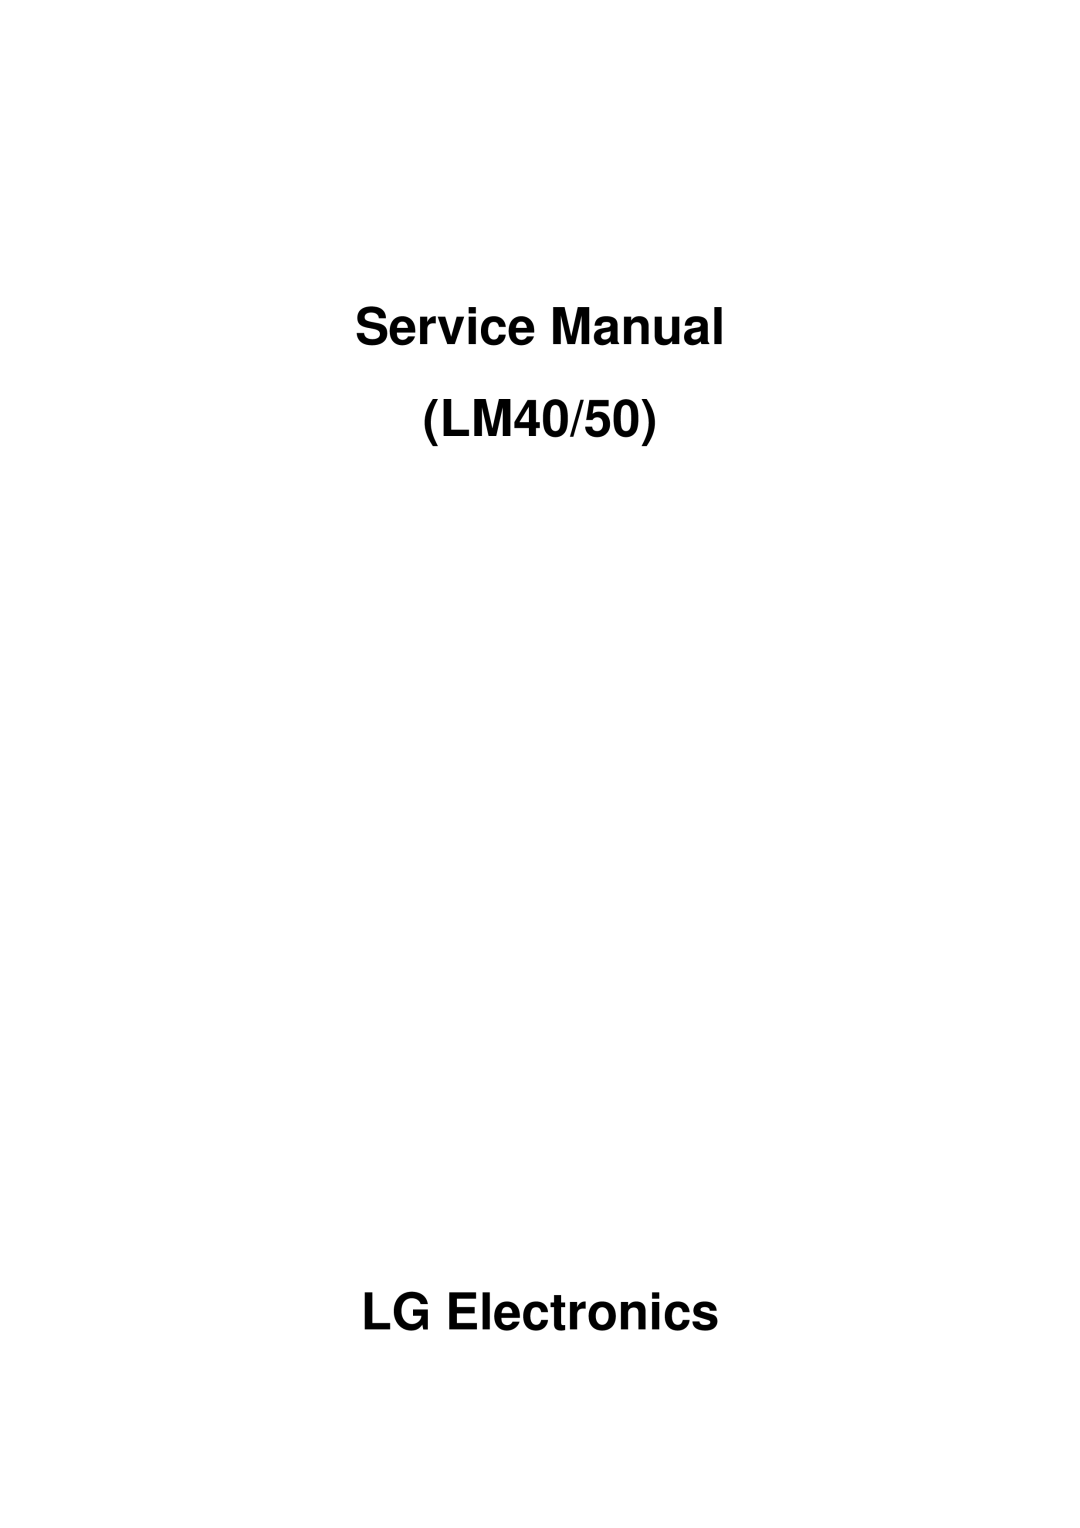 LG Electronics LM50 service manual Service Manual, LM40/50 LG Electronics 